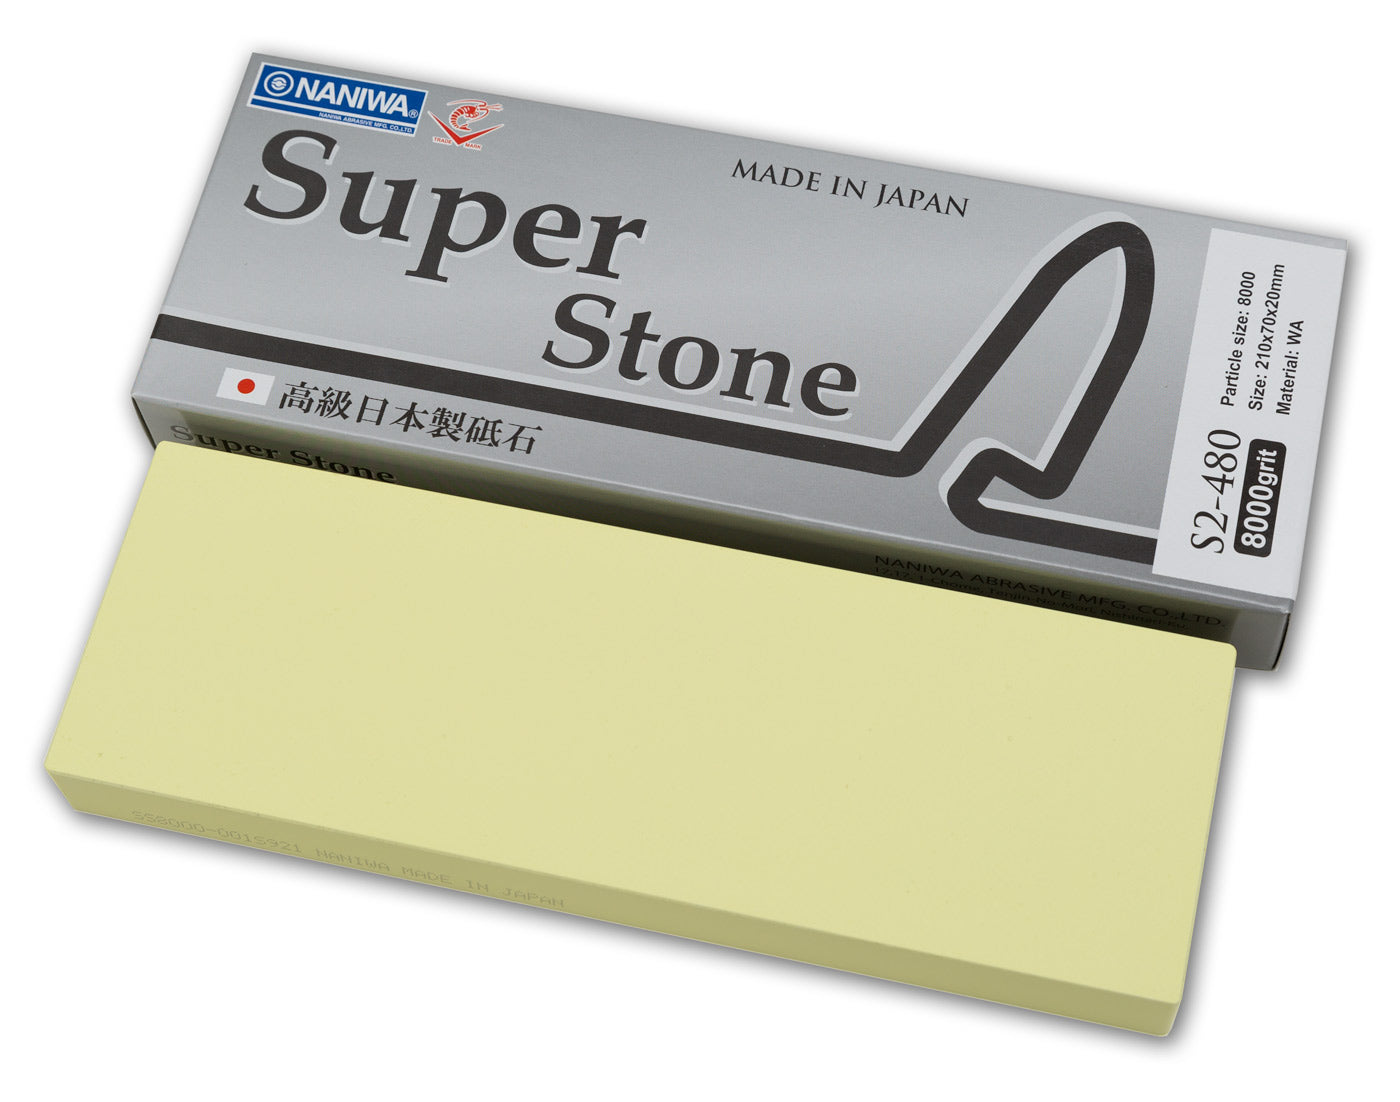 Naniwa Super-Stone Whetstone Sharpening Stone, 8000 grit